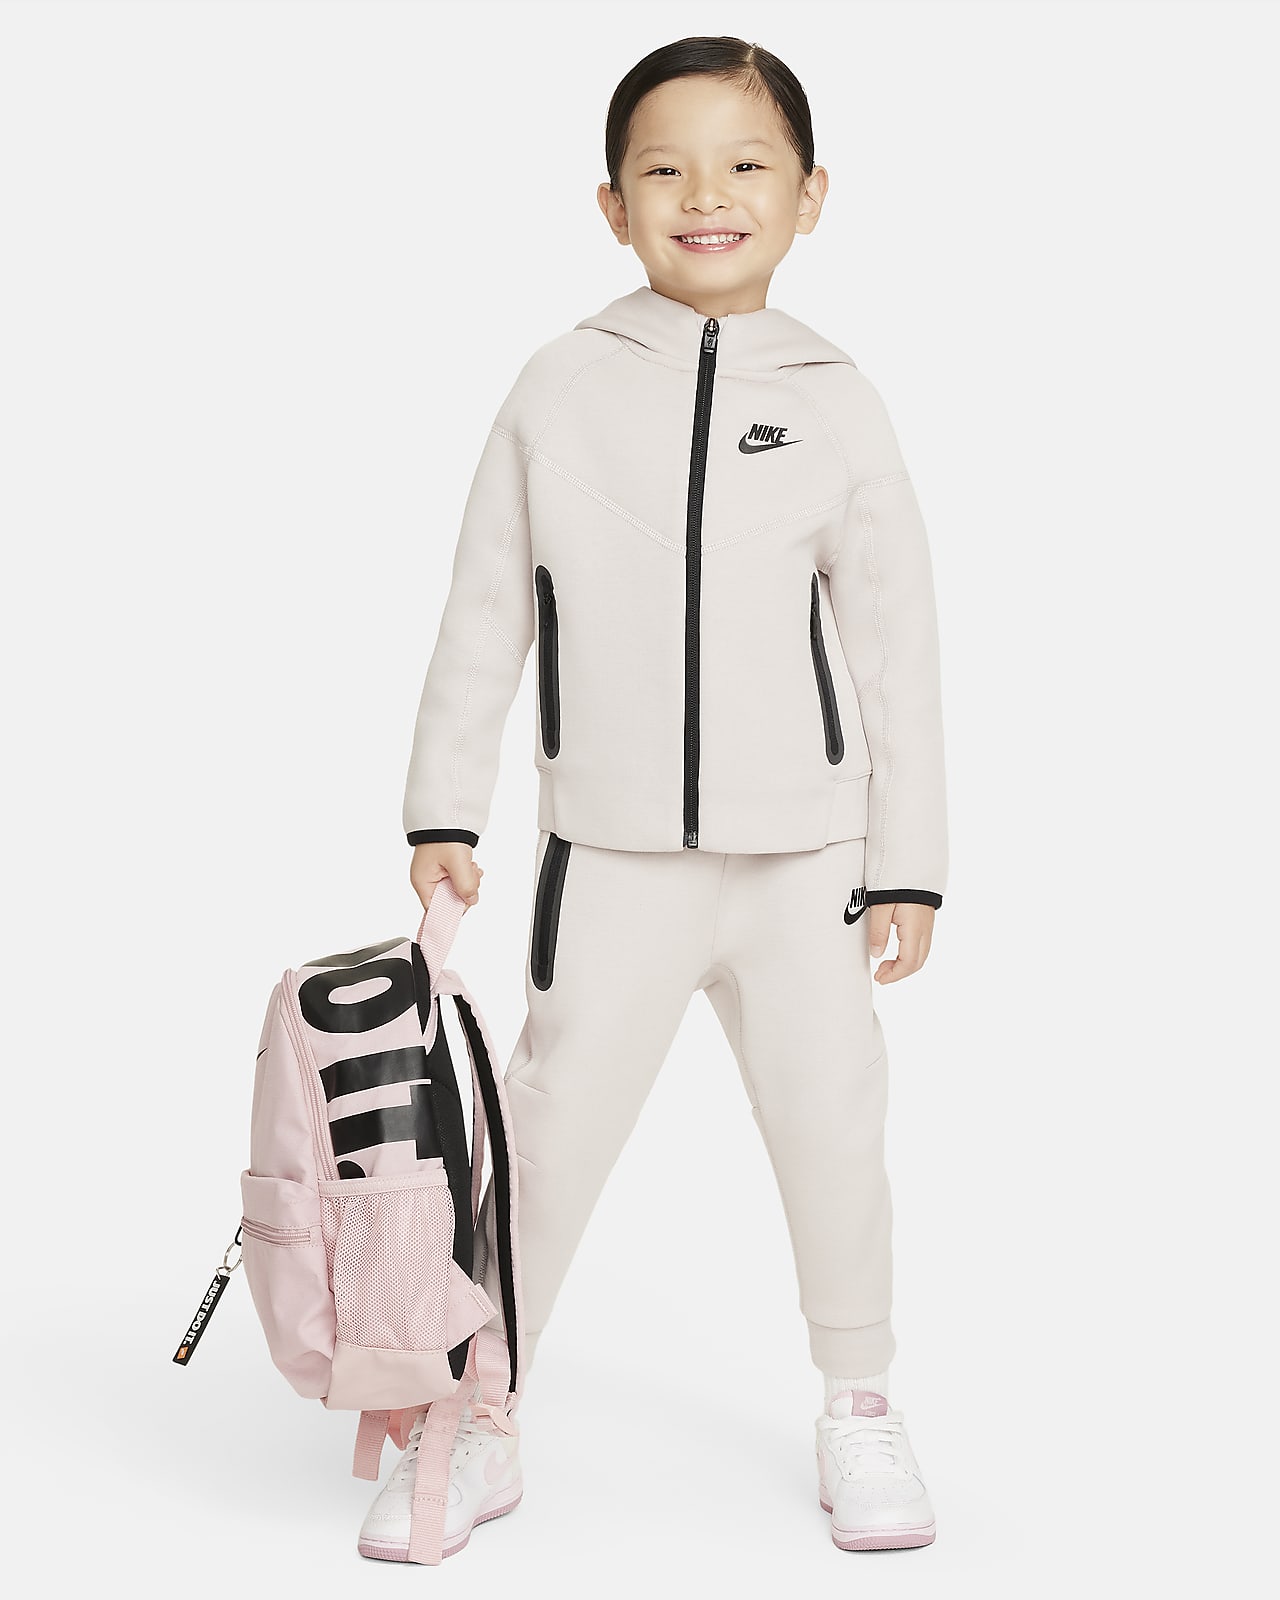 Nike Sportswear Tech Fleece Full-Zip Set Conjunt de dessuadora amb caputxa de dues peces - Infant